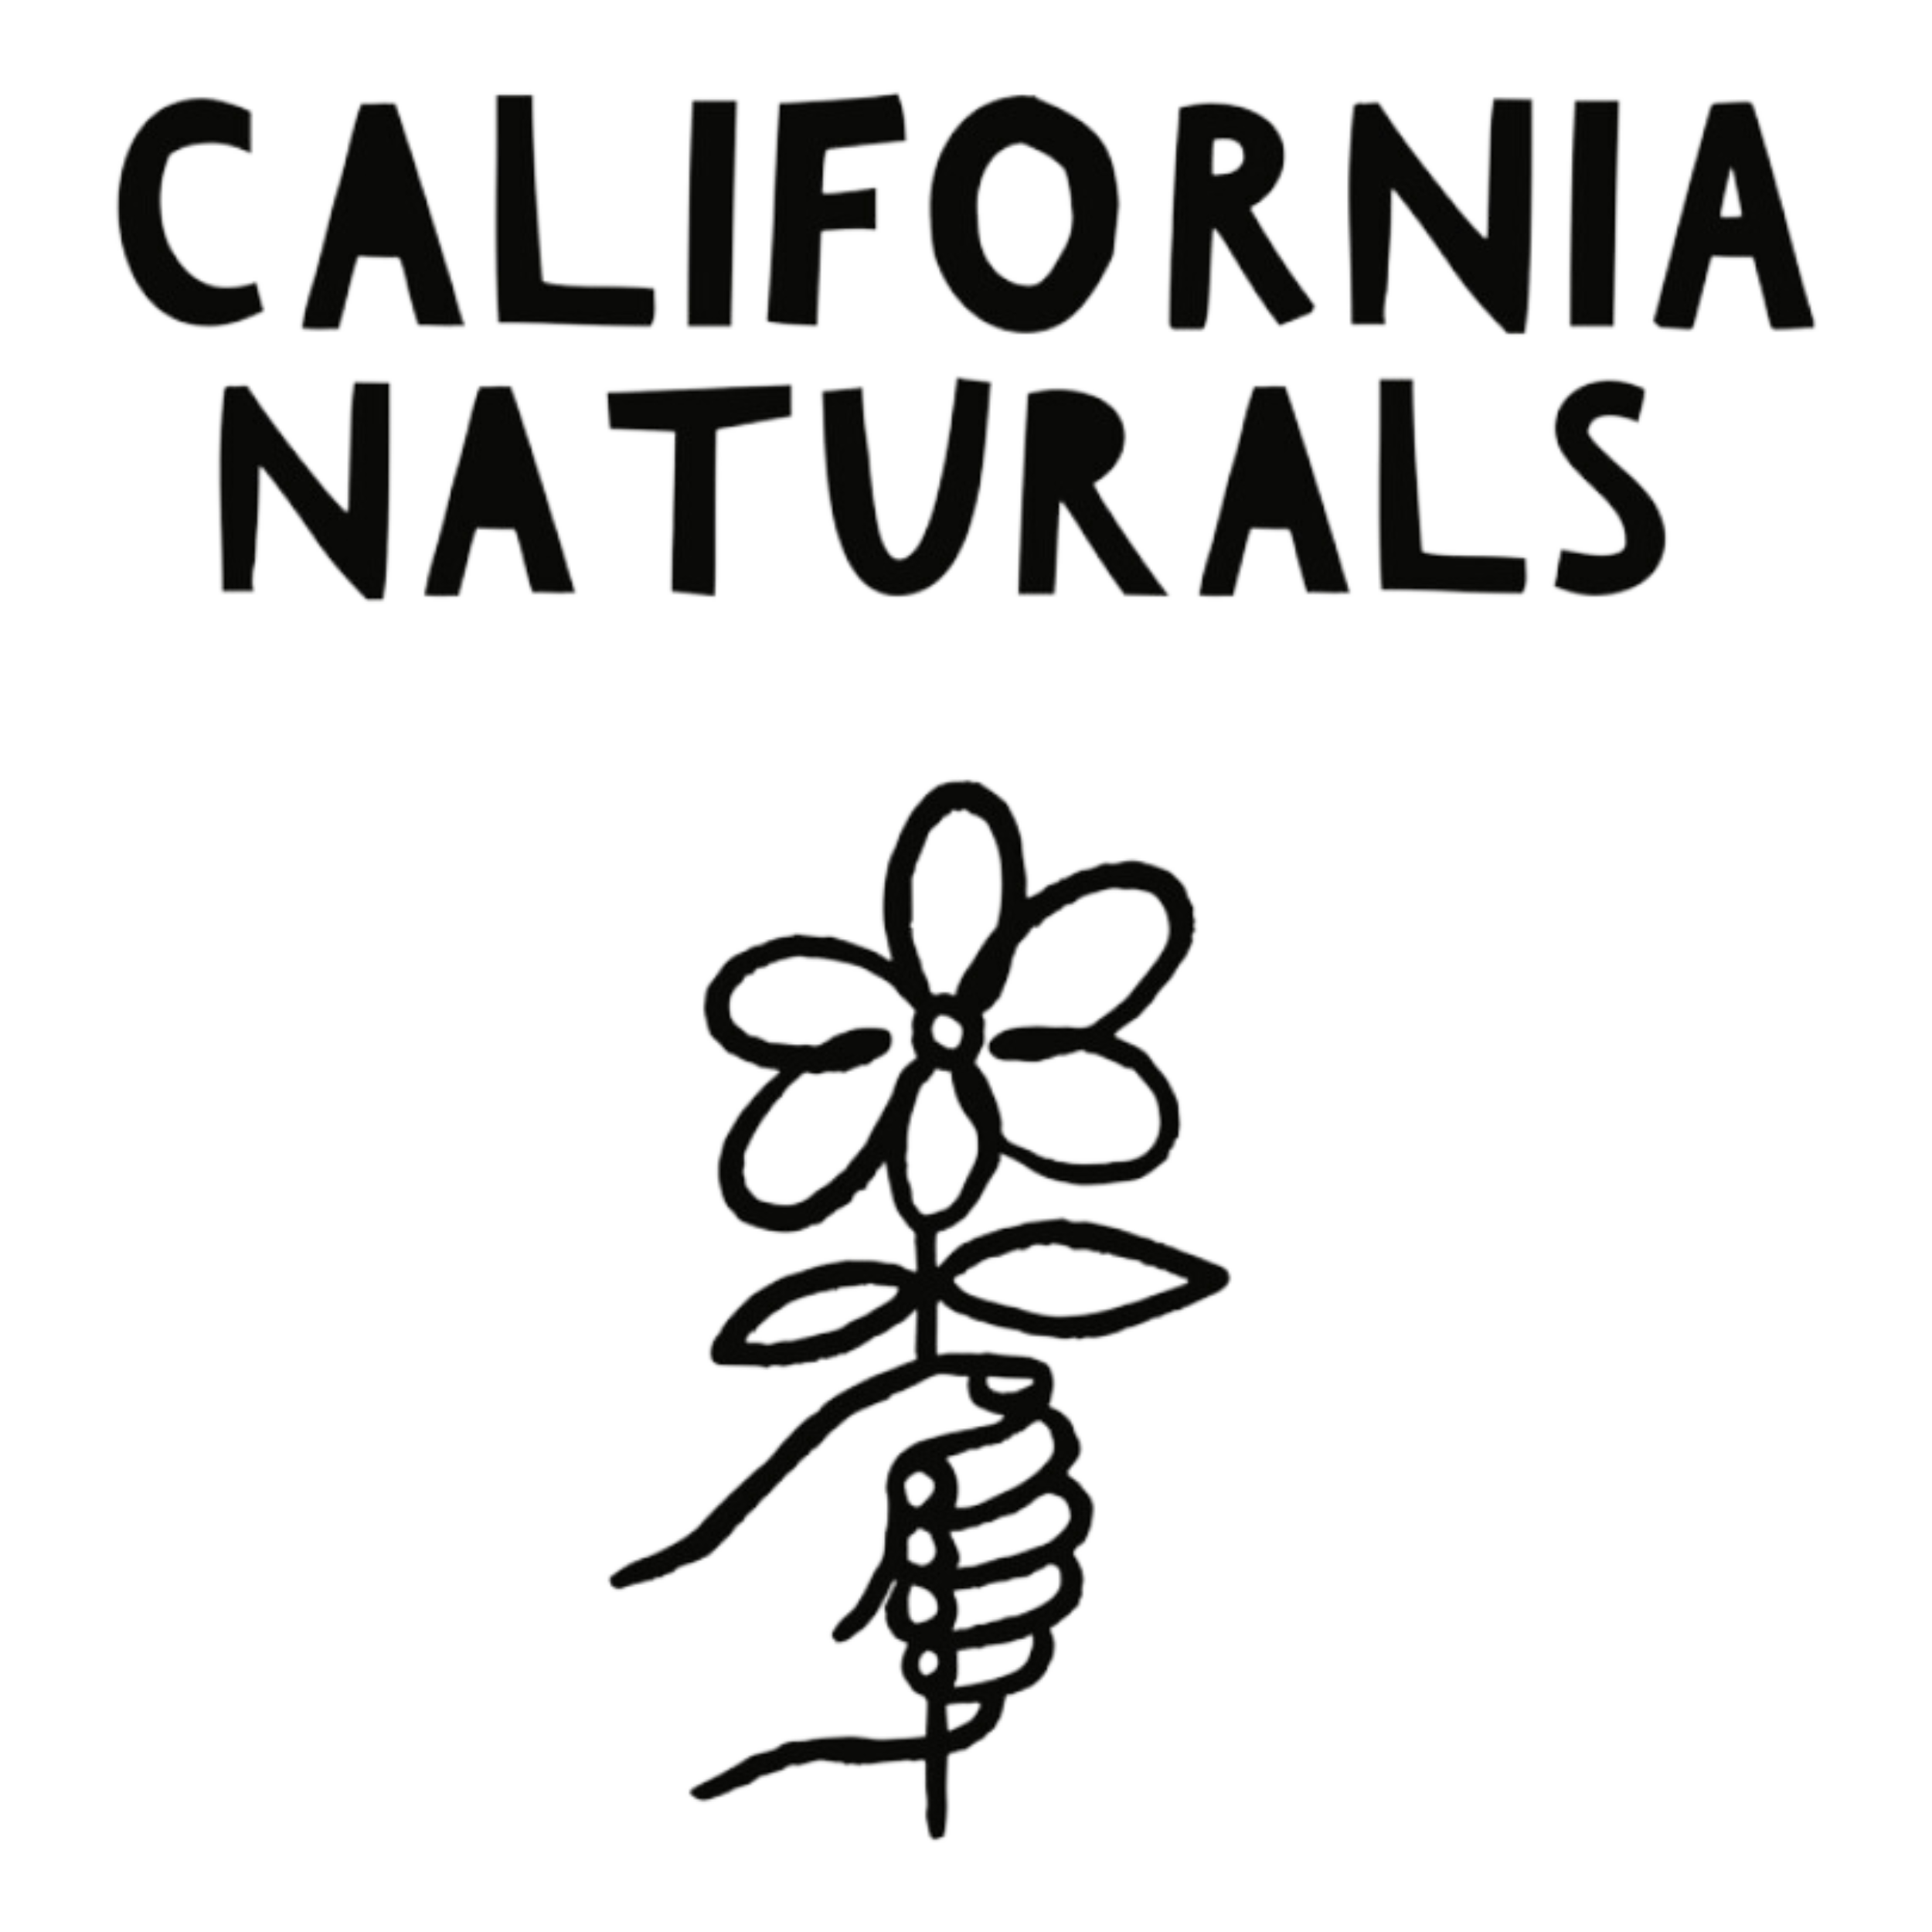 California Naturals